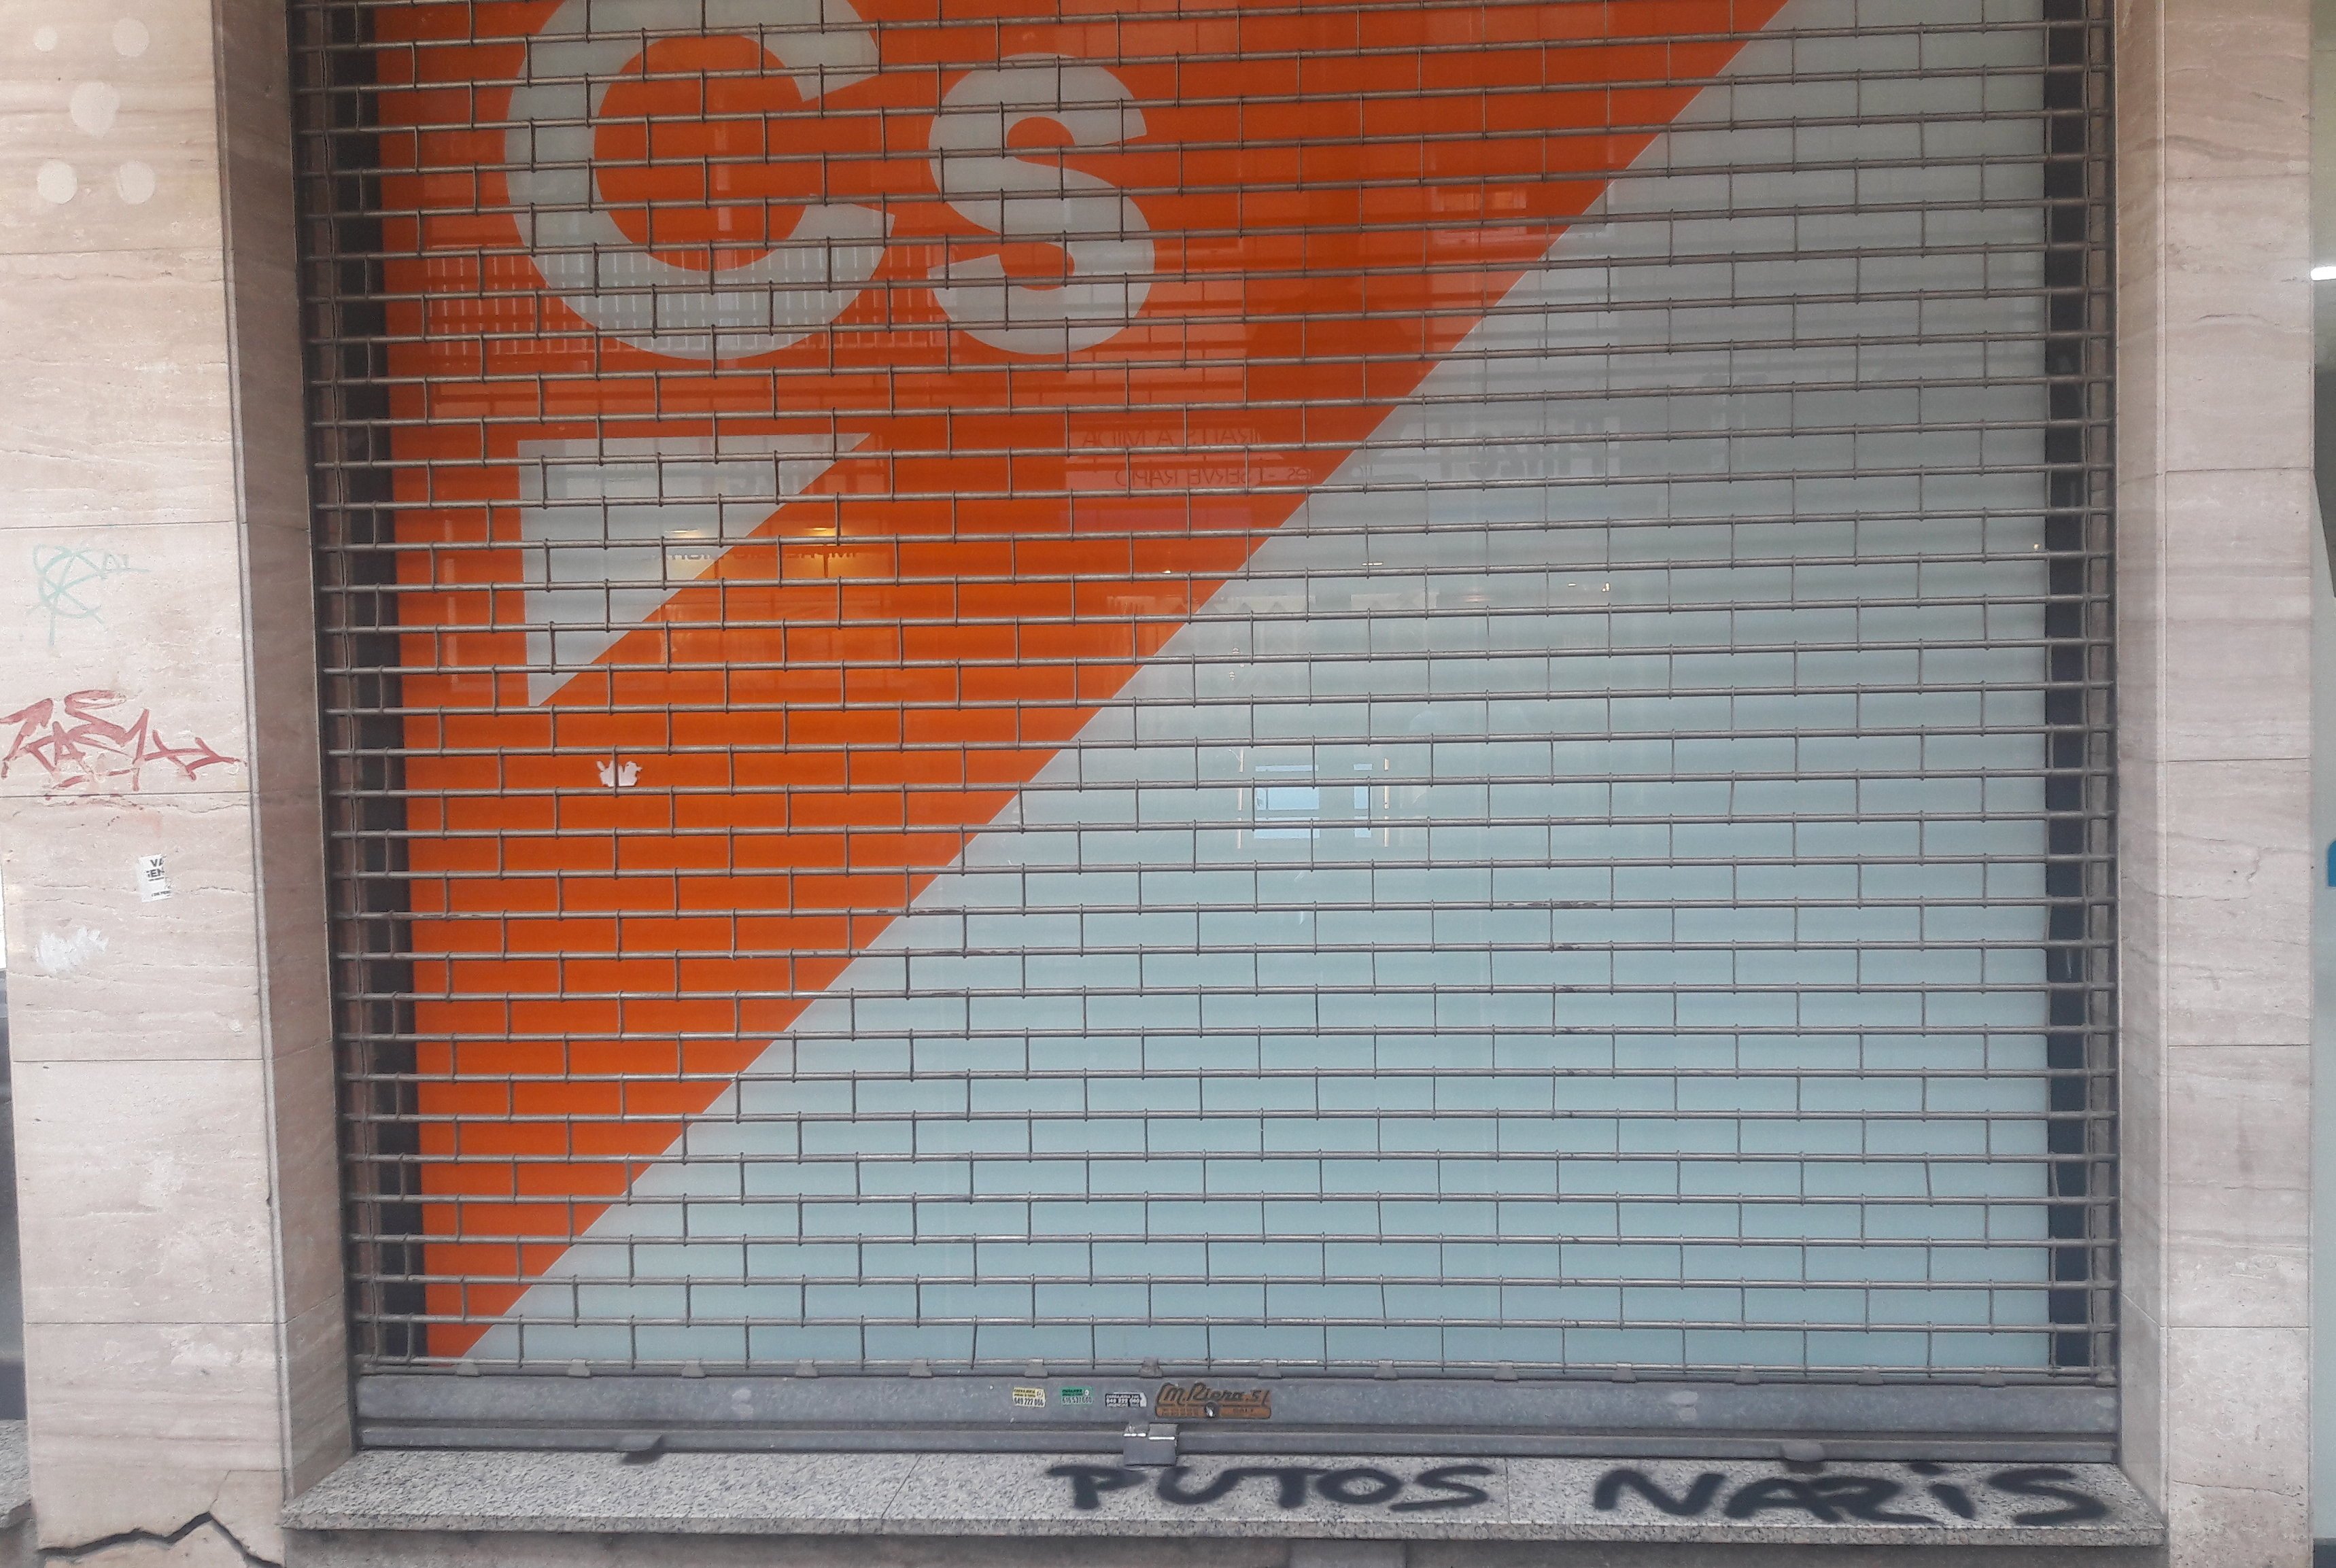 Aparecen pintadas en la sede de Ciudadanos en Girona: "nazis"